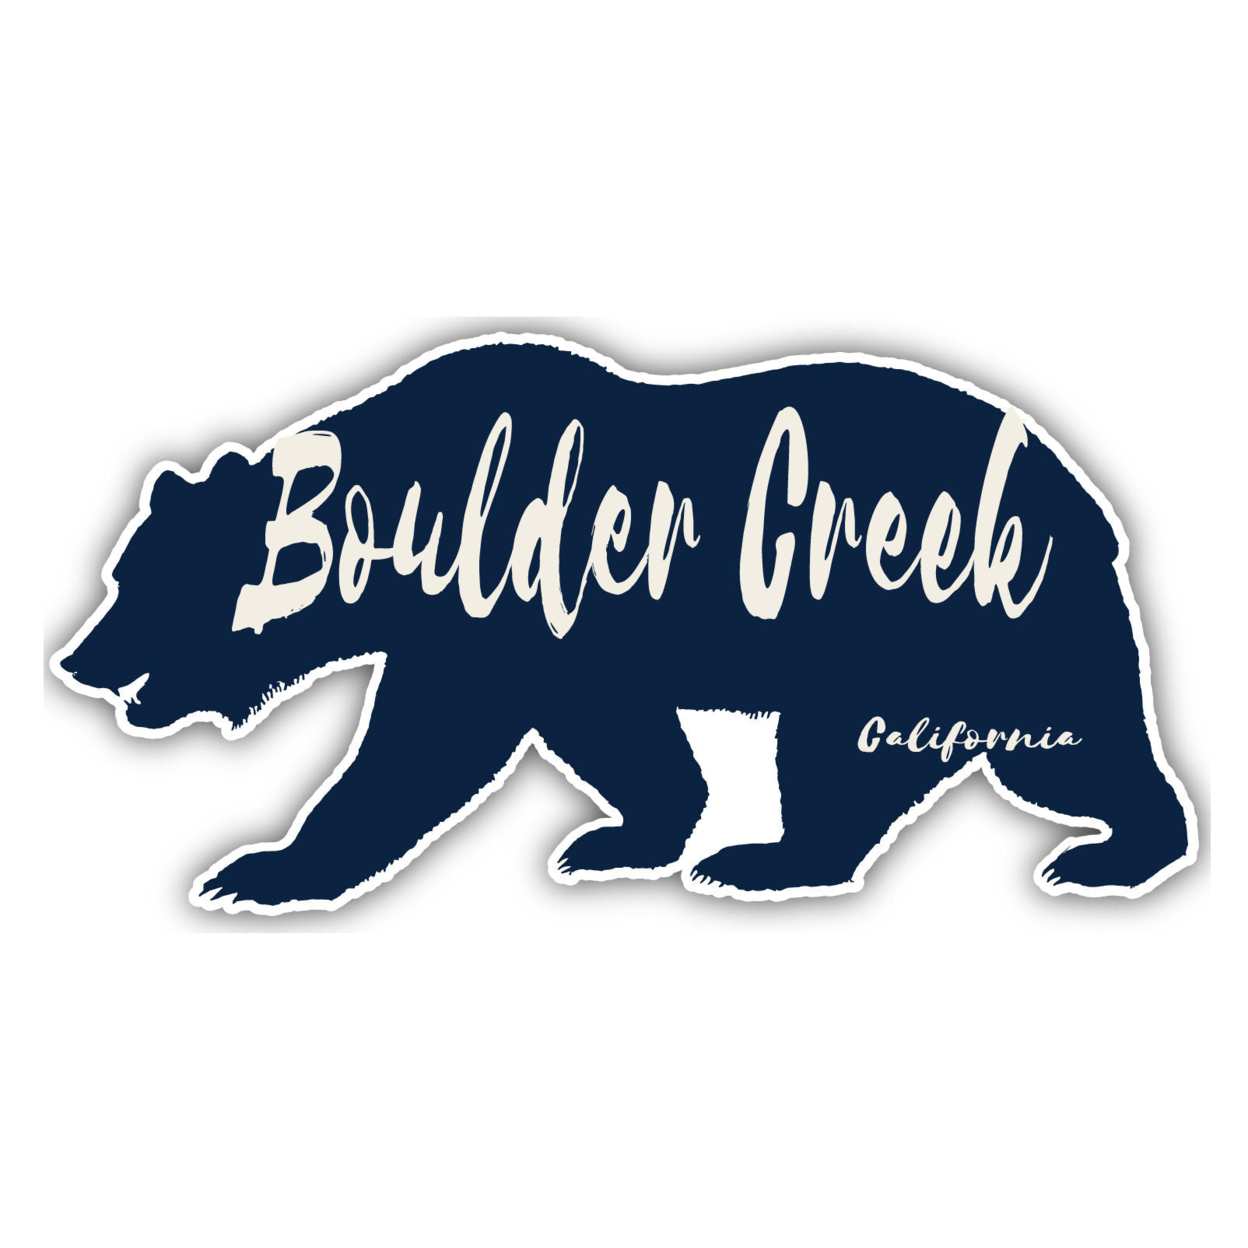 Boulder Creek California Souvenir Decorative Stickers (Choose Theme And Size) - Single Unit, 8-Inch, Bear